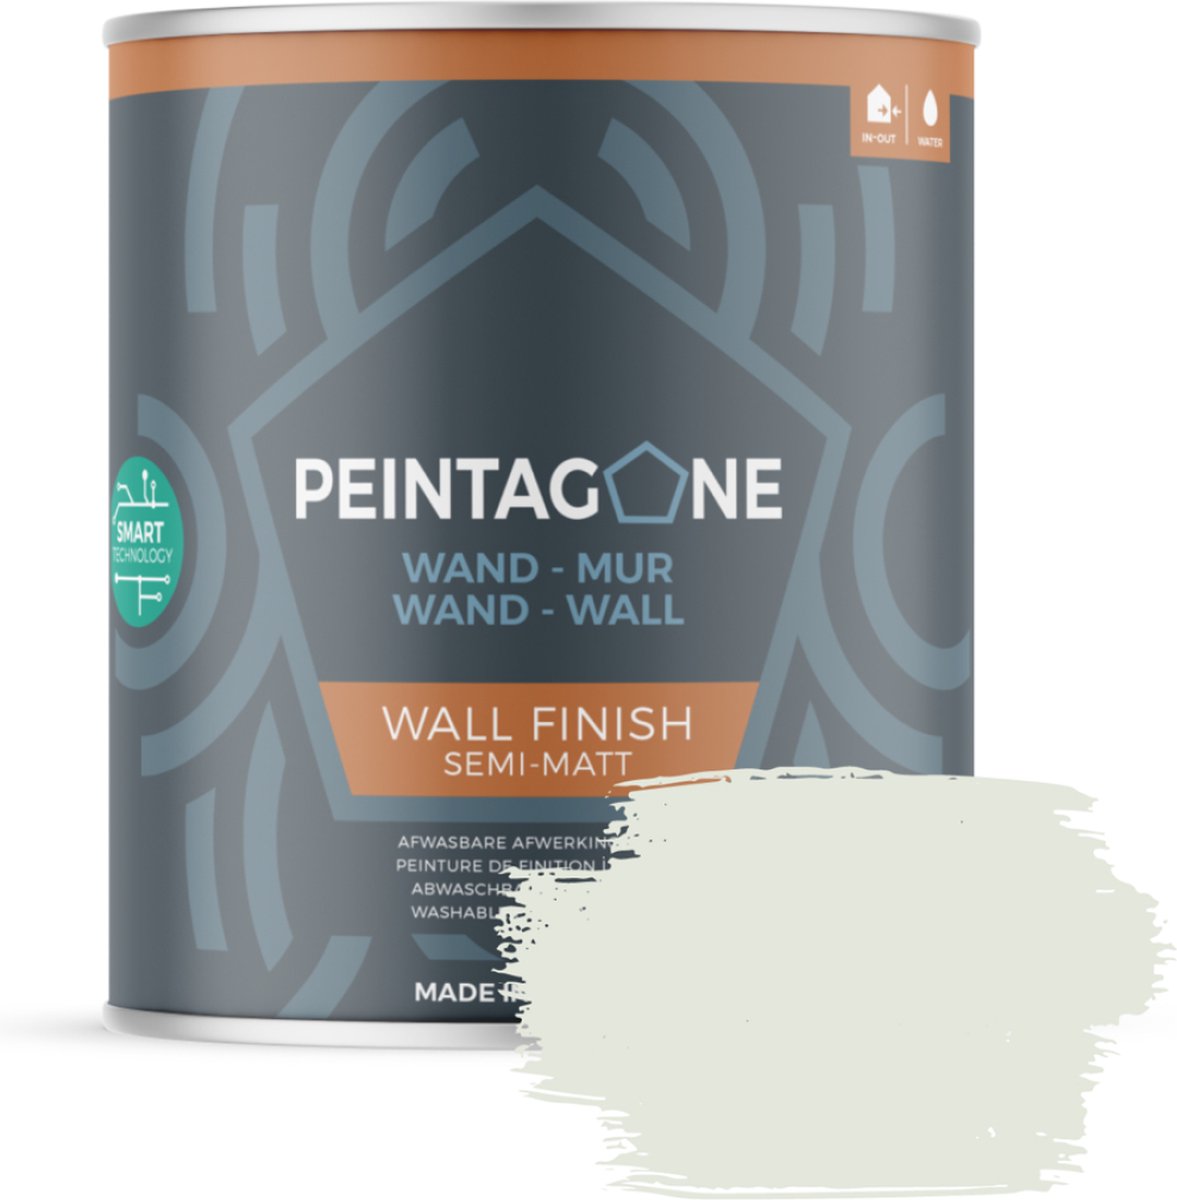 Peintagone - Wall Finish Semi-Mat - 1 liter - PE043 Monday